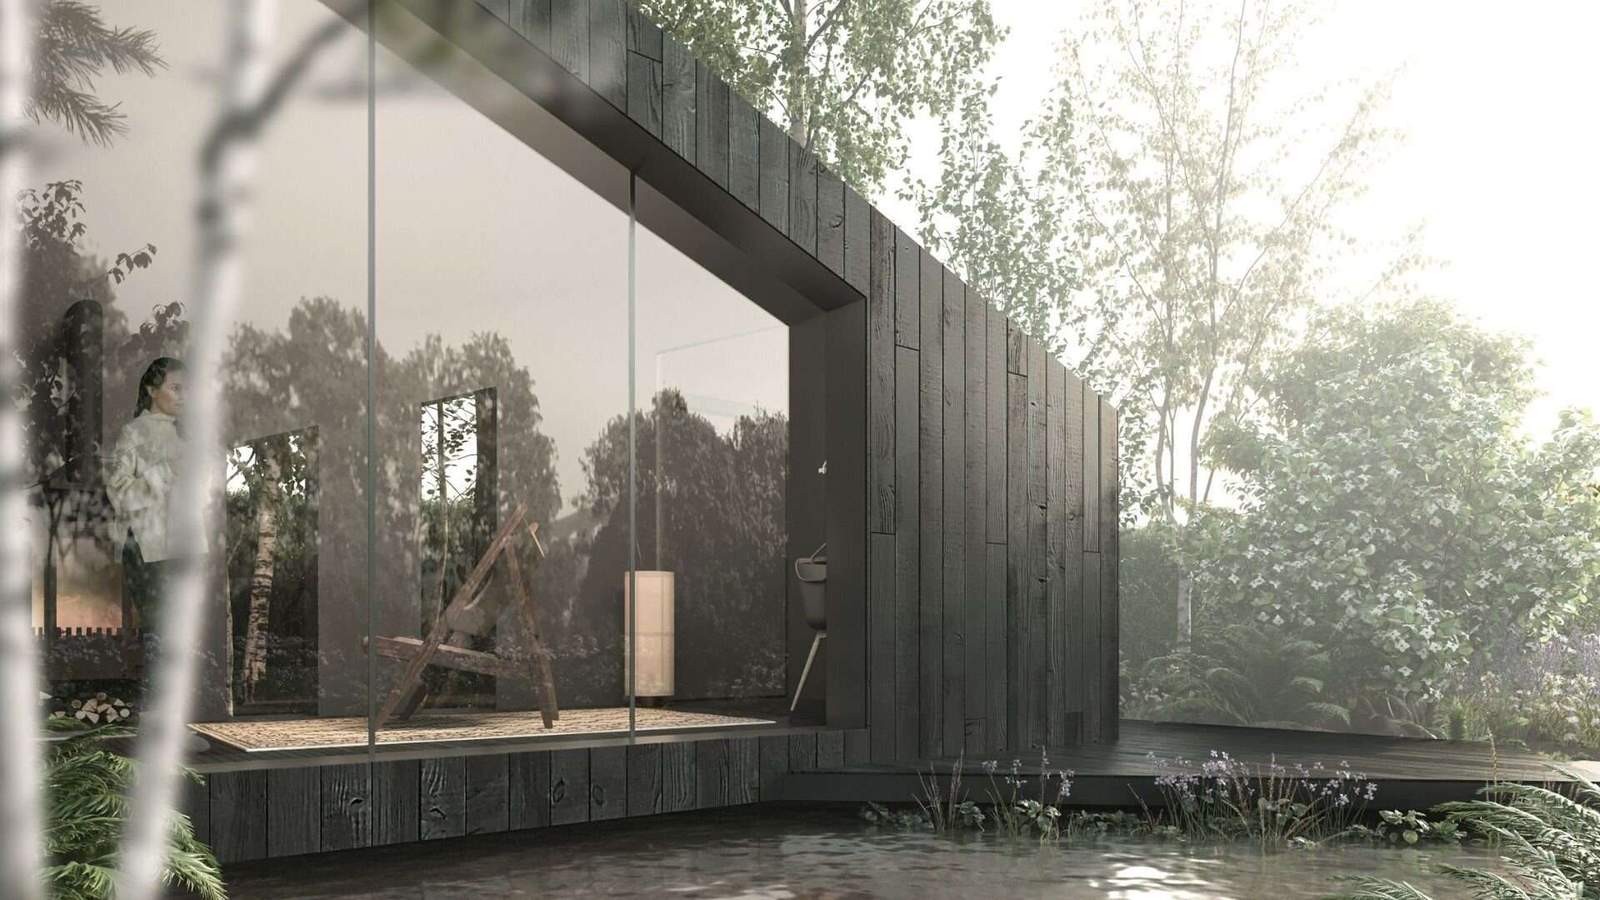 Koto’s garden cabin features a carbon-capturing exterior تتميز كابينة حديقة Koto بتصميم خارجي يمتص الكربون